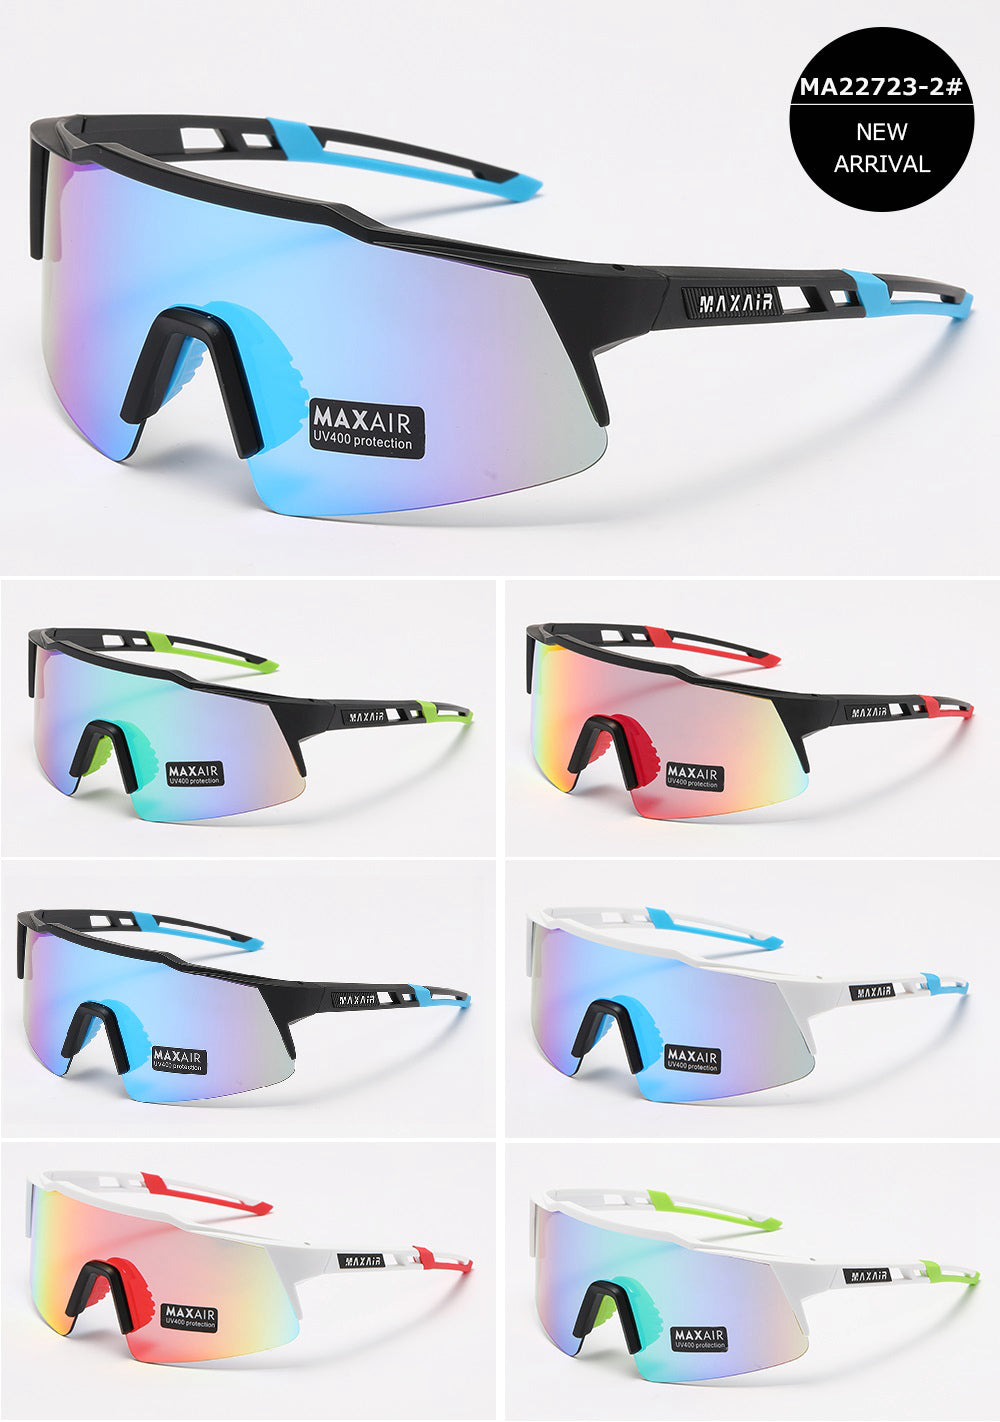 Maxair 22723-2 Sunglasses